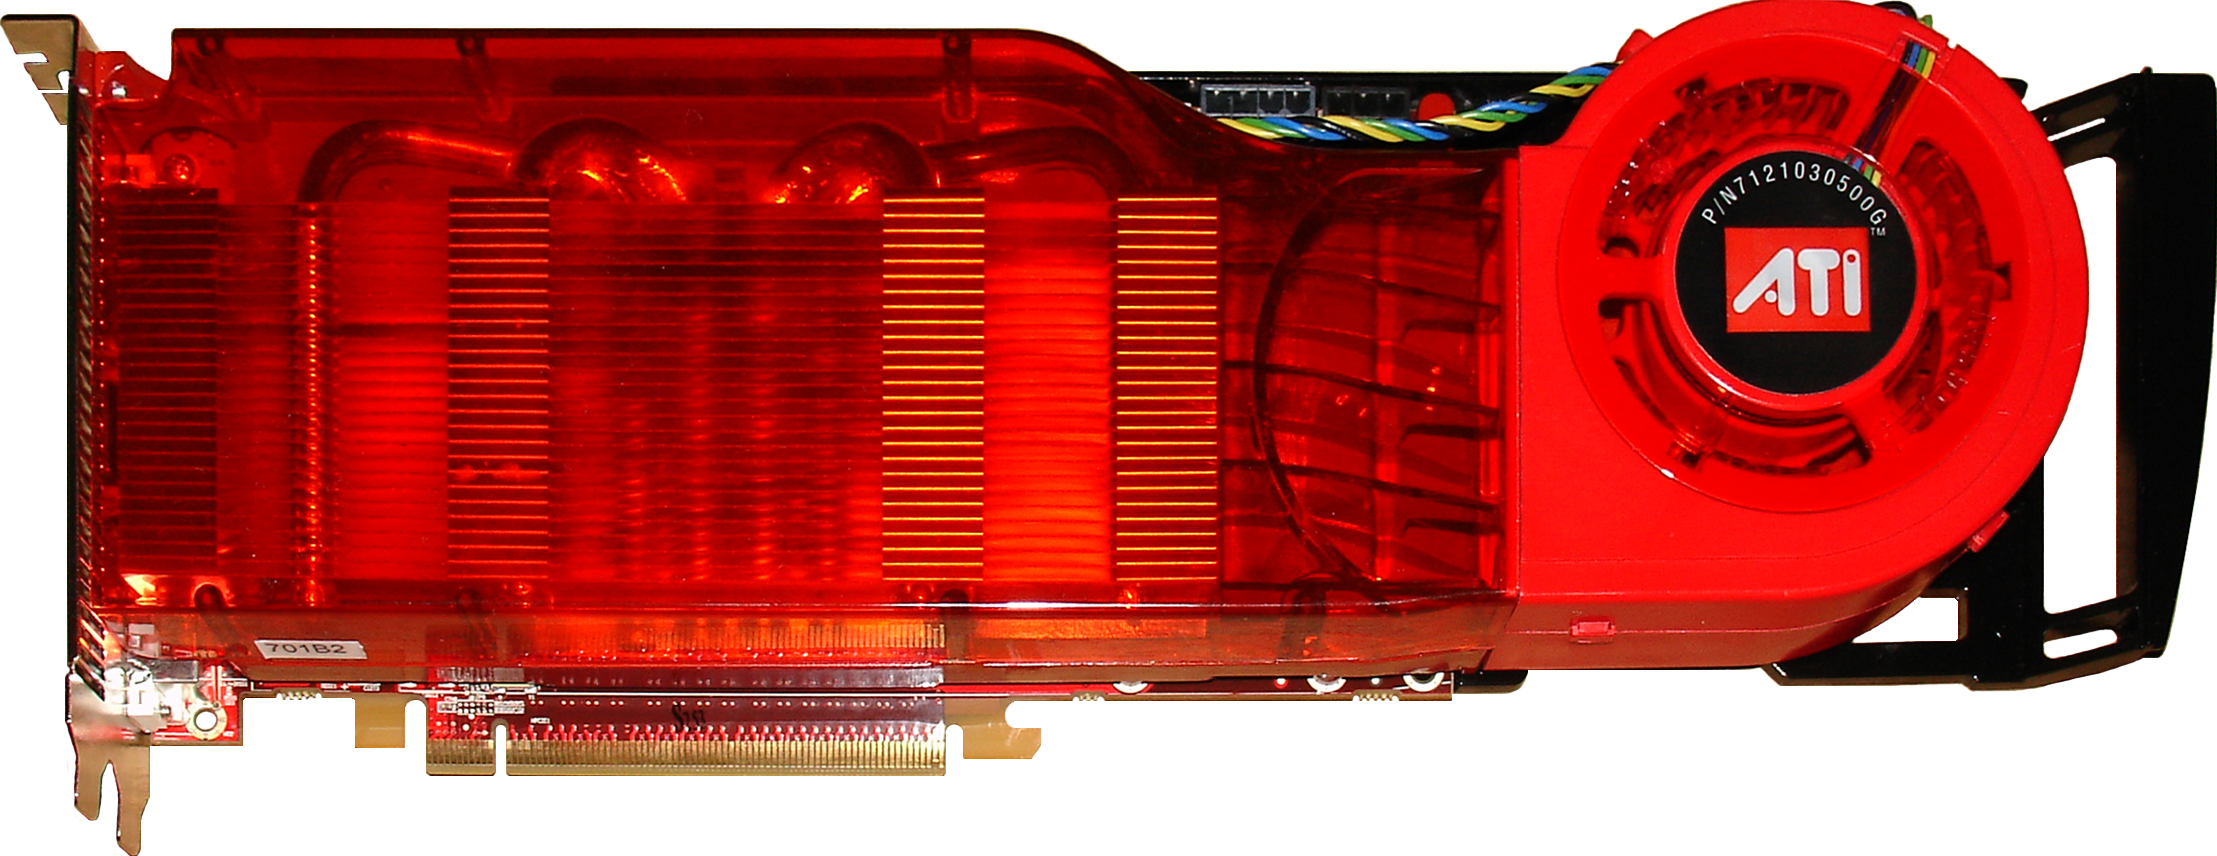 ATi Radeon HD 2900 XTX 1024MB GDDR4 512Bit Rev_A1 0704 Prototype top1.jpg